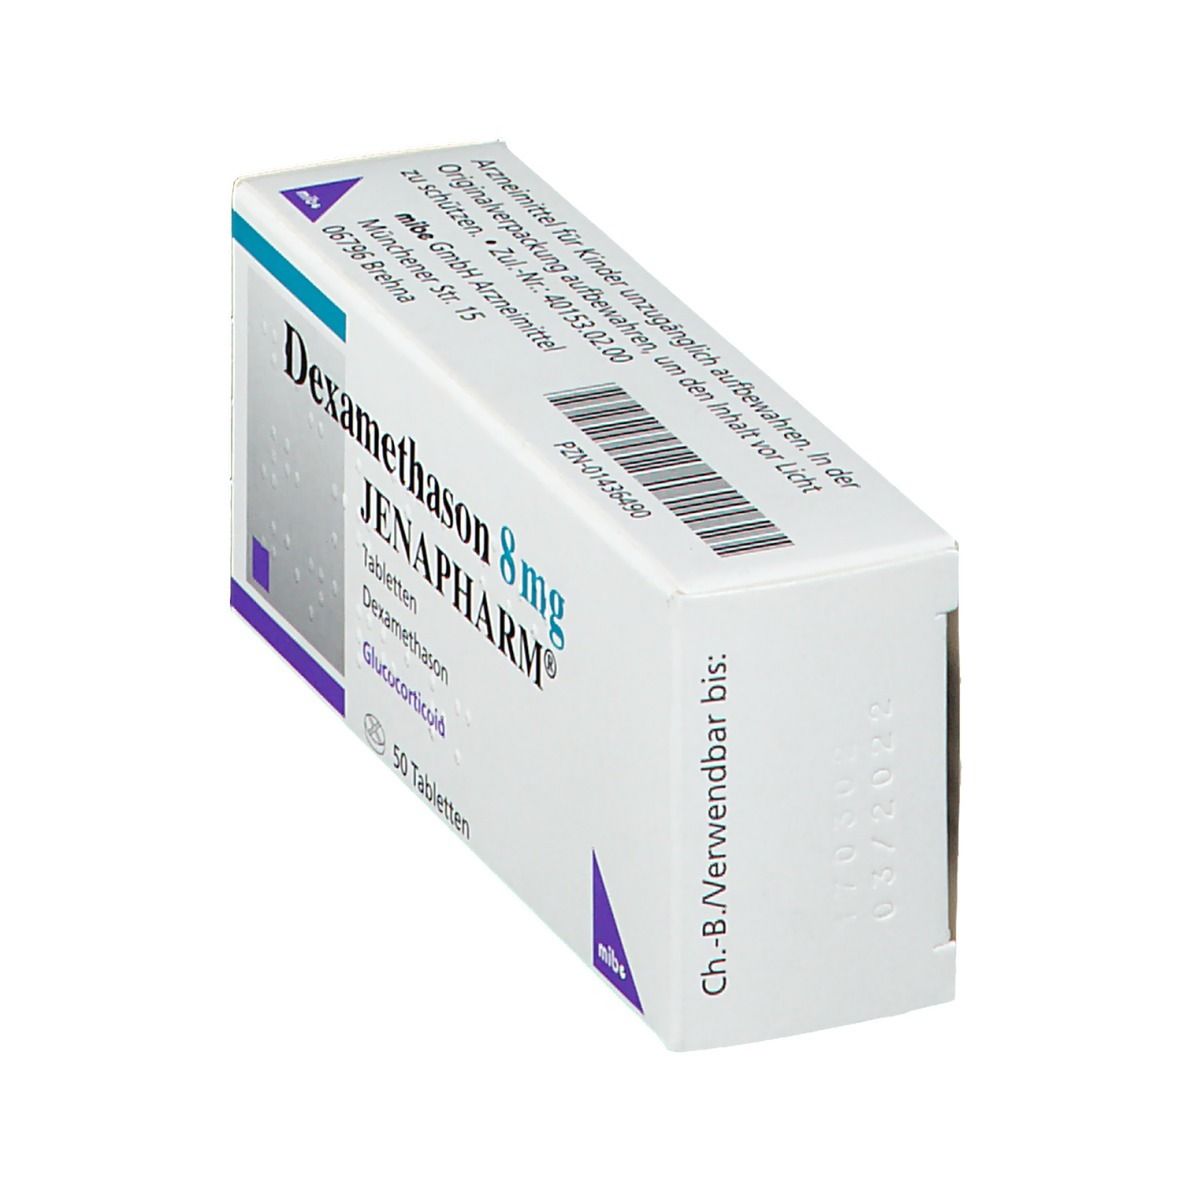 Dexamethason 8 mg Jenapharm